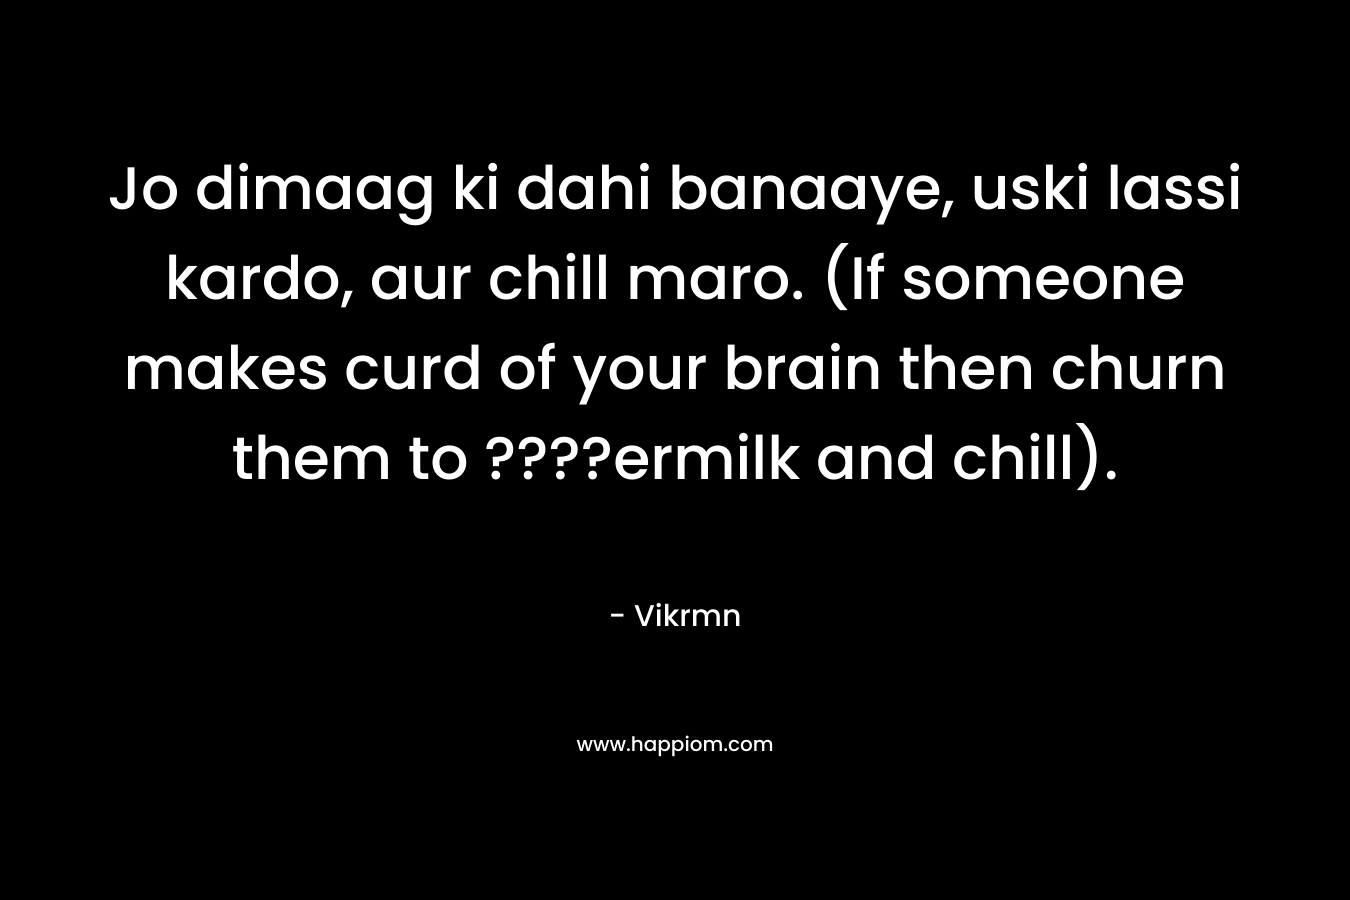 Jo dimaag ki dahi banaaye, uski lassi kardo, aur chill maro. (If someone makes curd of your brain then churn them to ????ermilk and chill).